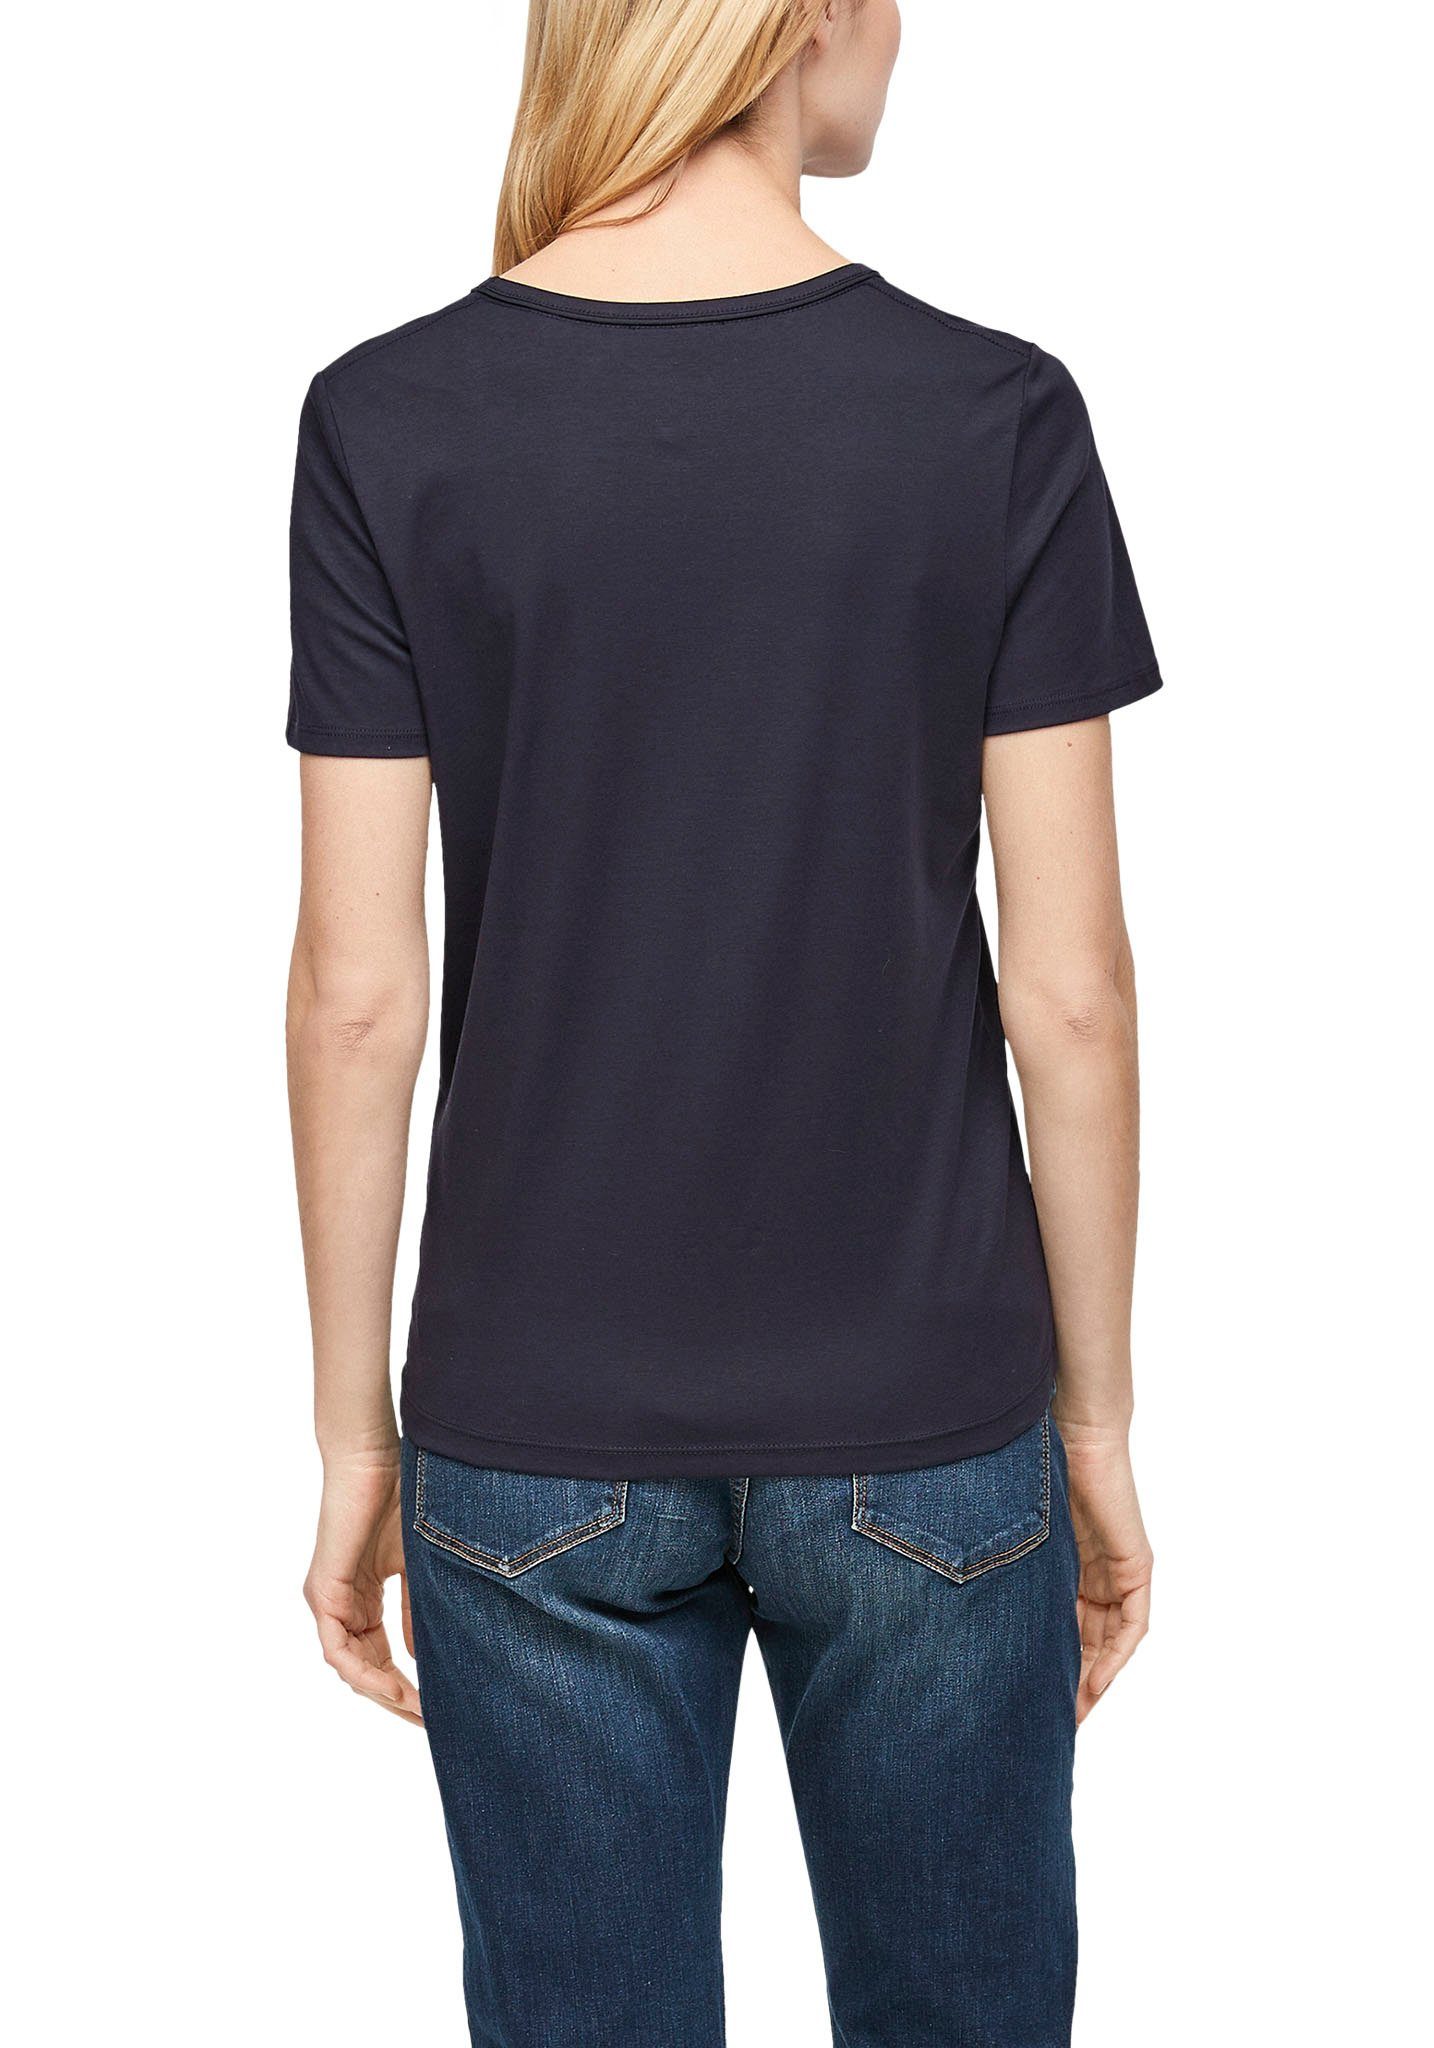 s.Oliver mit T-Shirt Saum dunkelblau umgenähtem